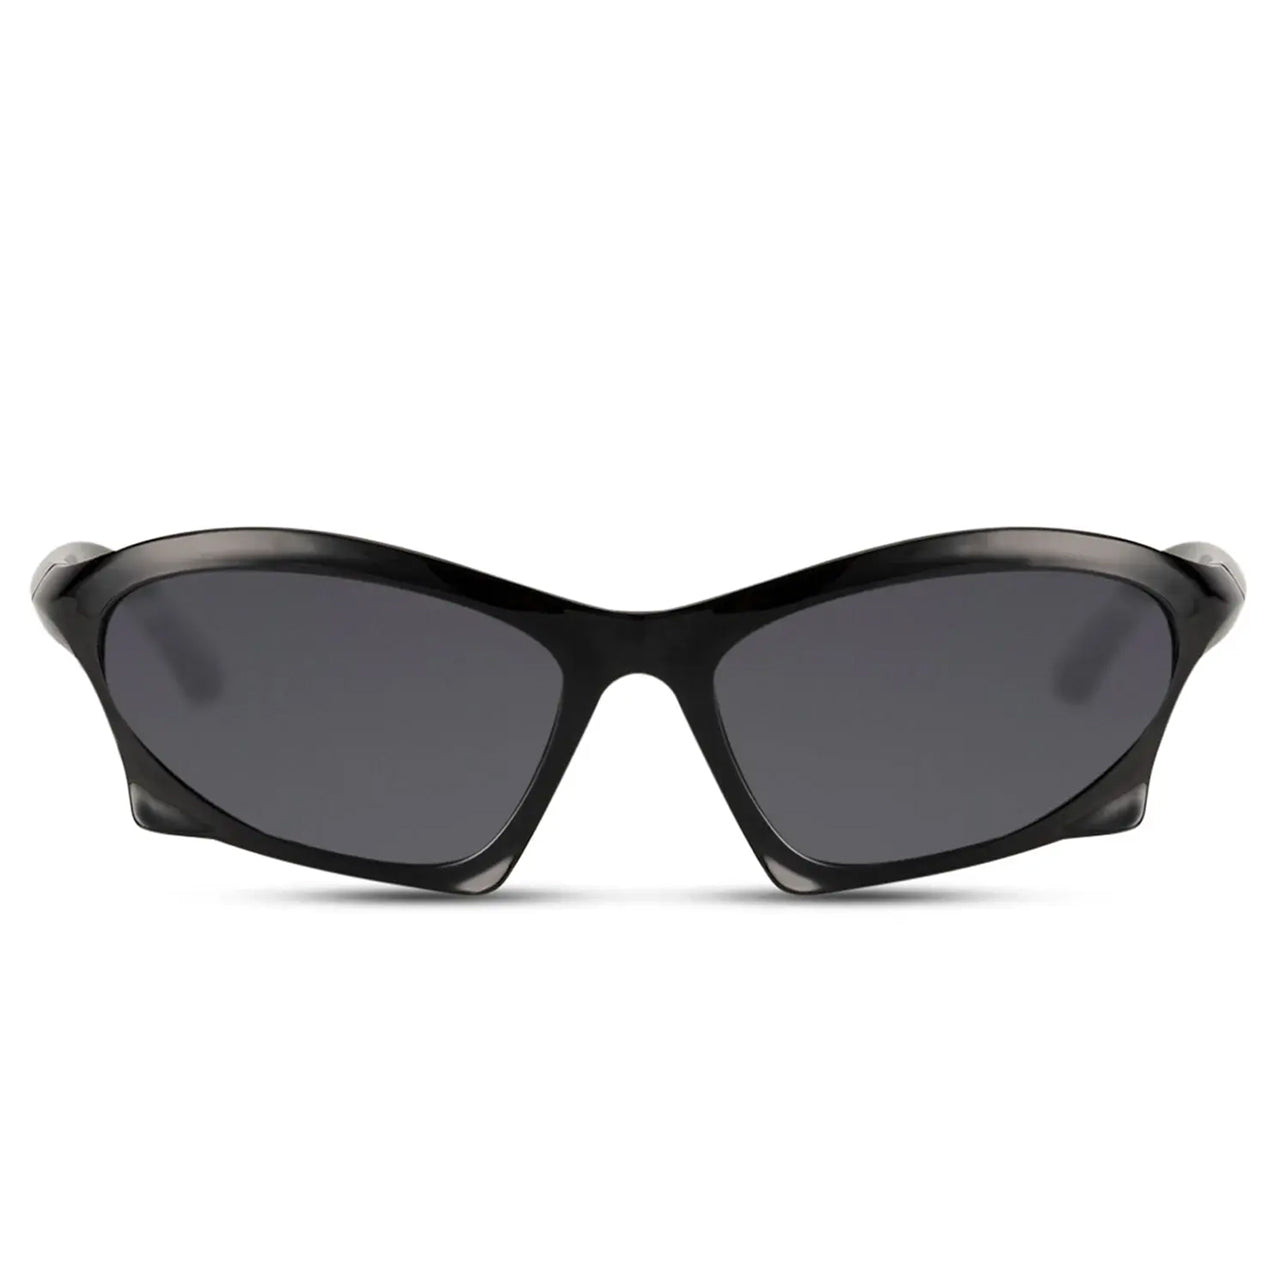 Snash - Sunglasses Techno black